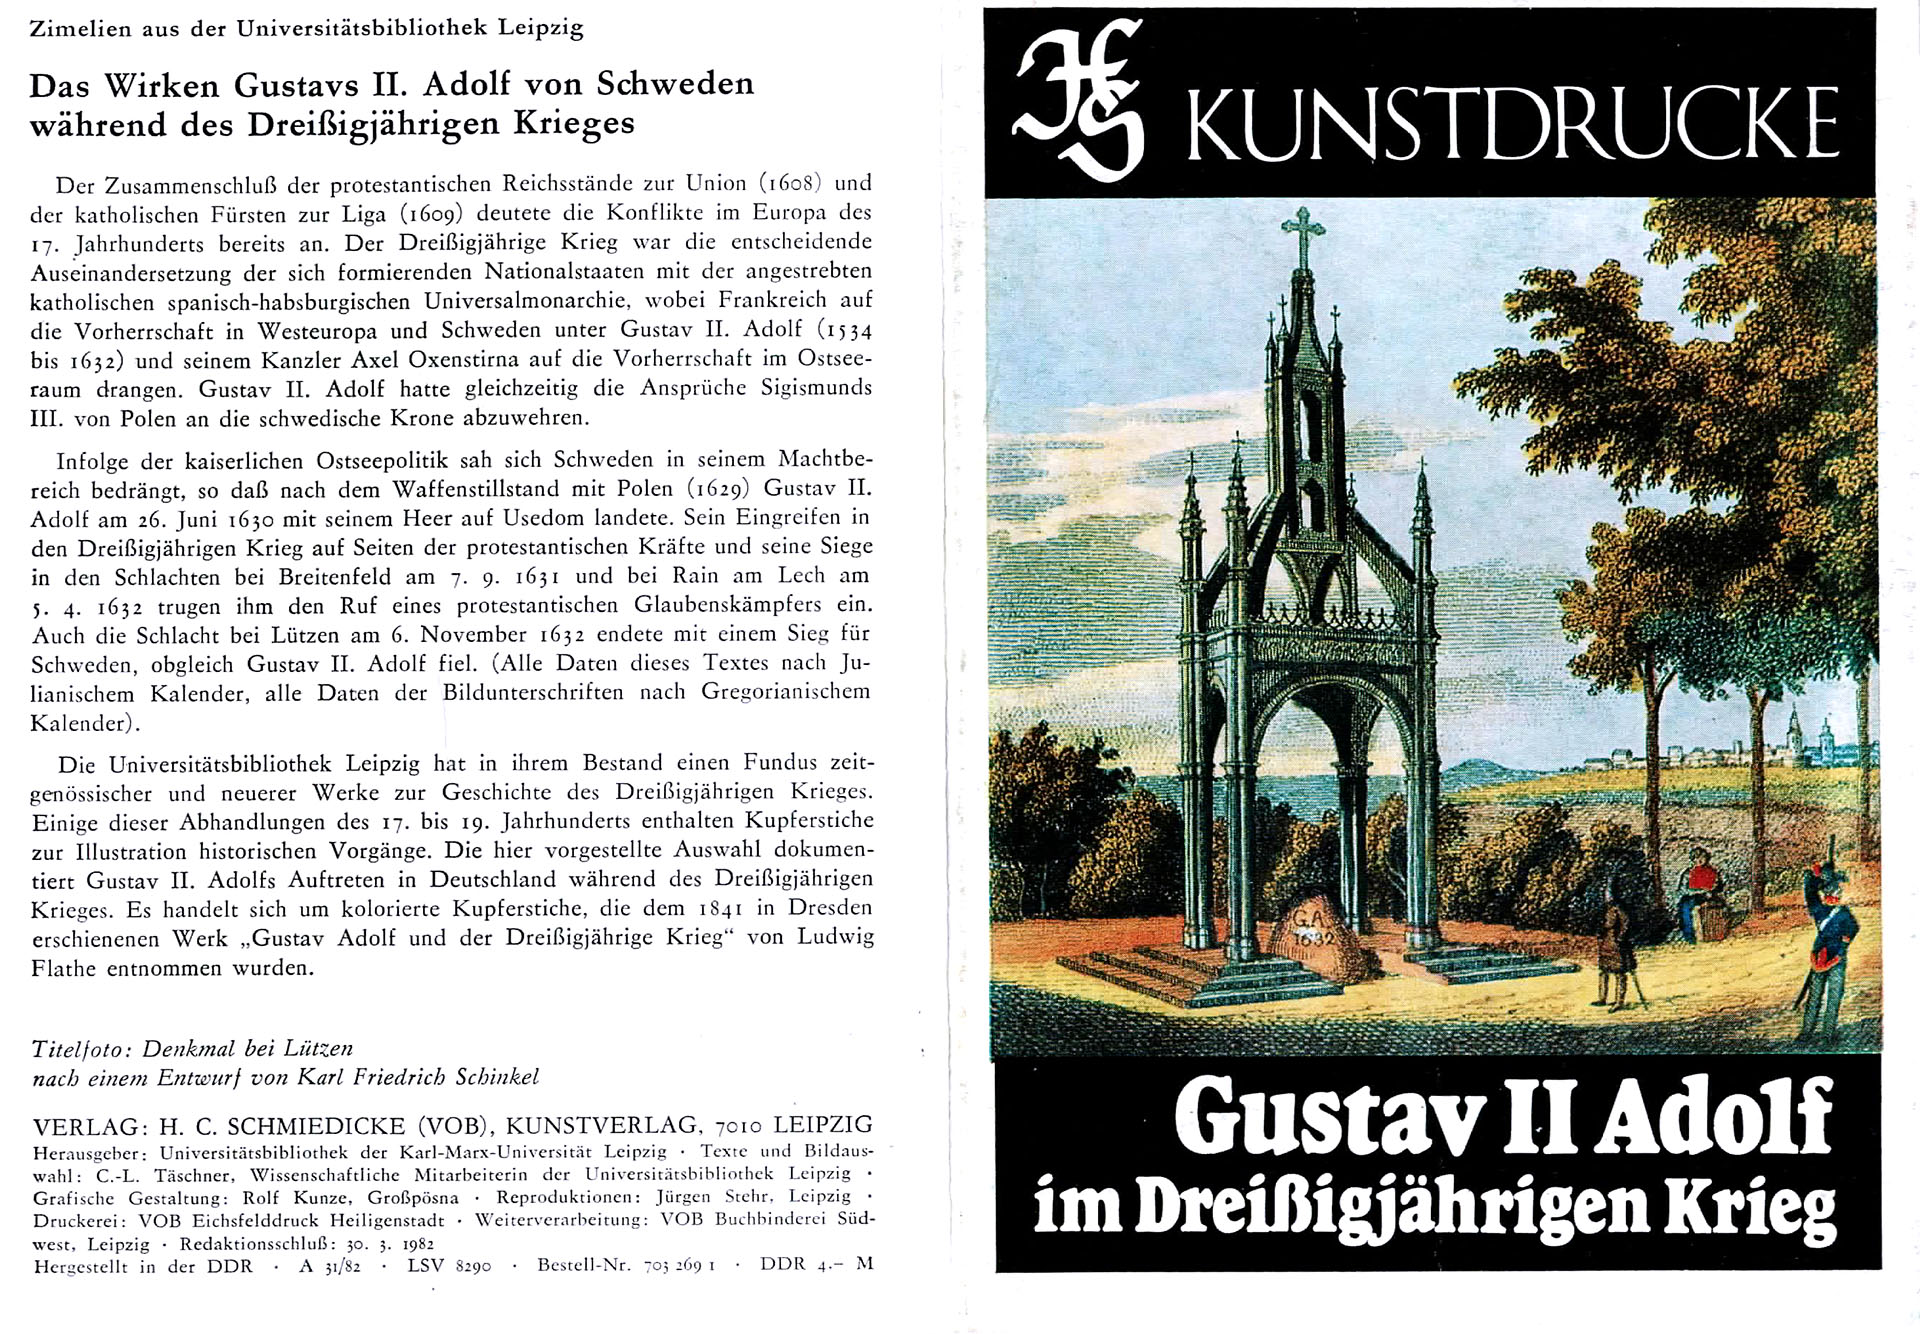 Gustav II Adolf im Dreißigjährigen Krieg - Universitätsbibliothek der Karl - Marx - Universität Leipzig